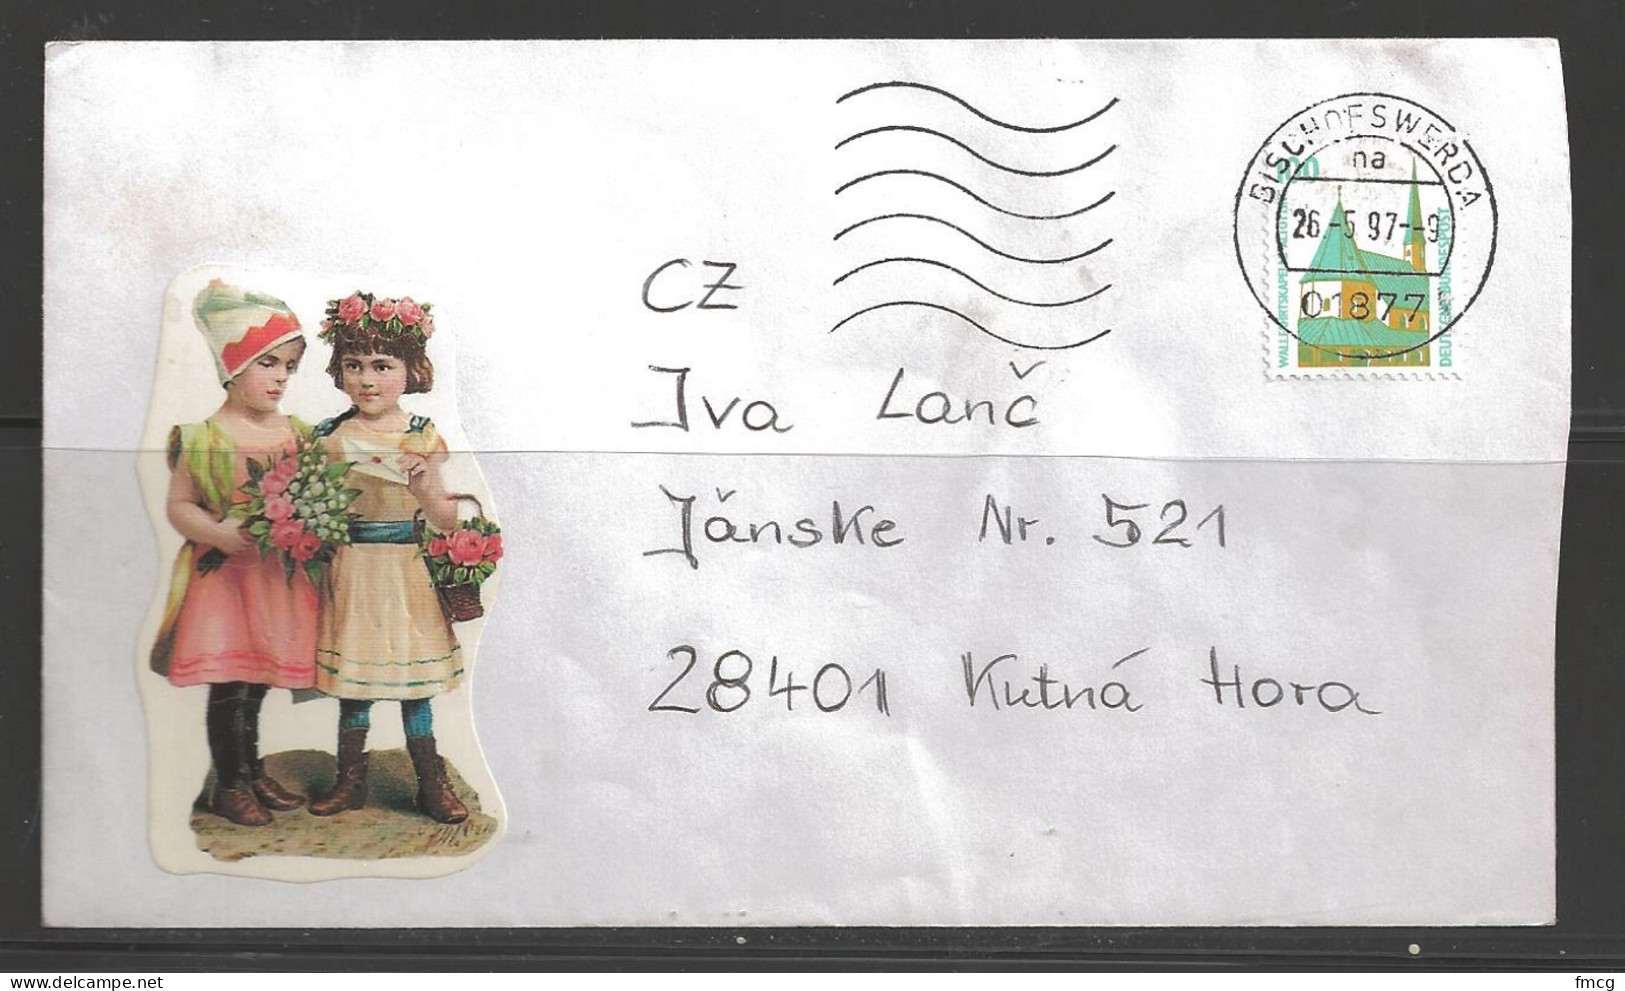 1997 Gisohofswerda (26.5.97) To Kutna Hora Czech Republic - Covers & Documents